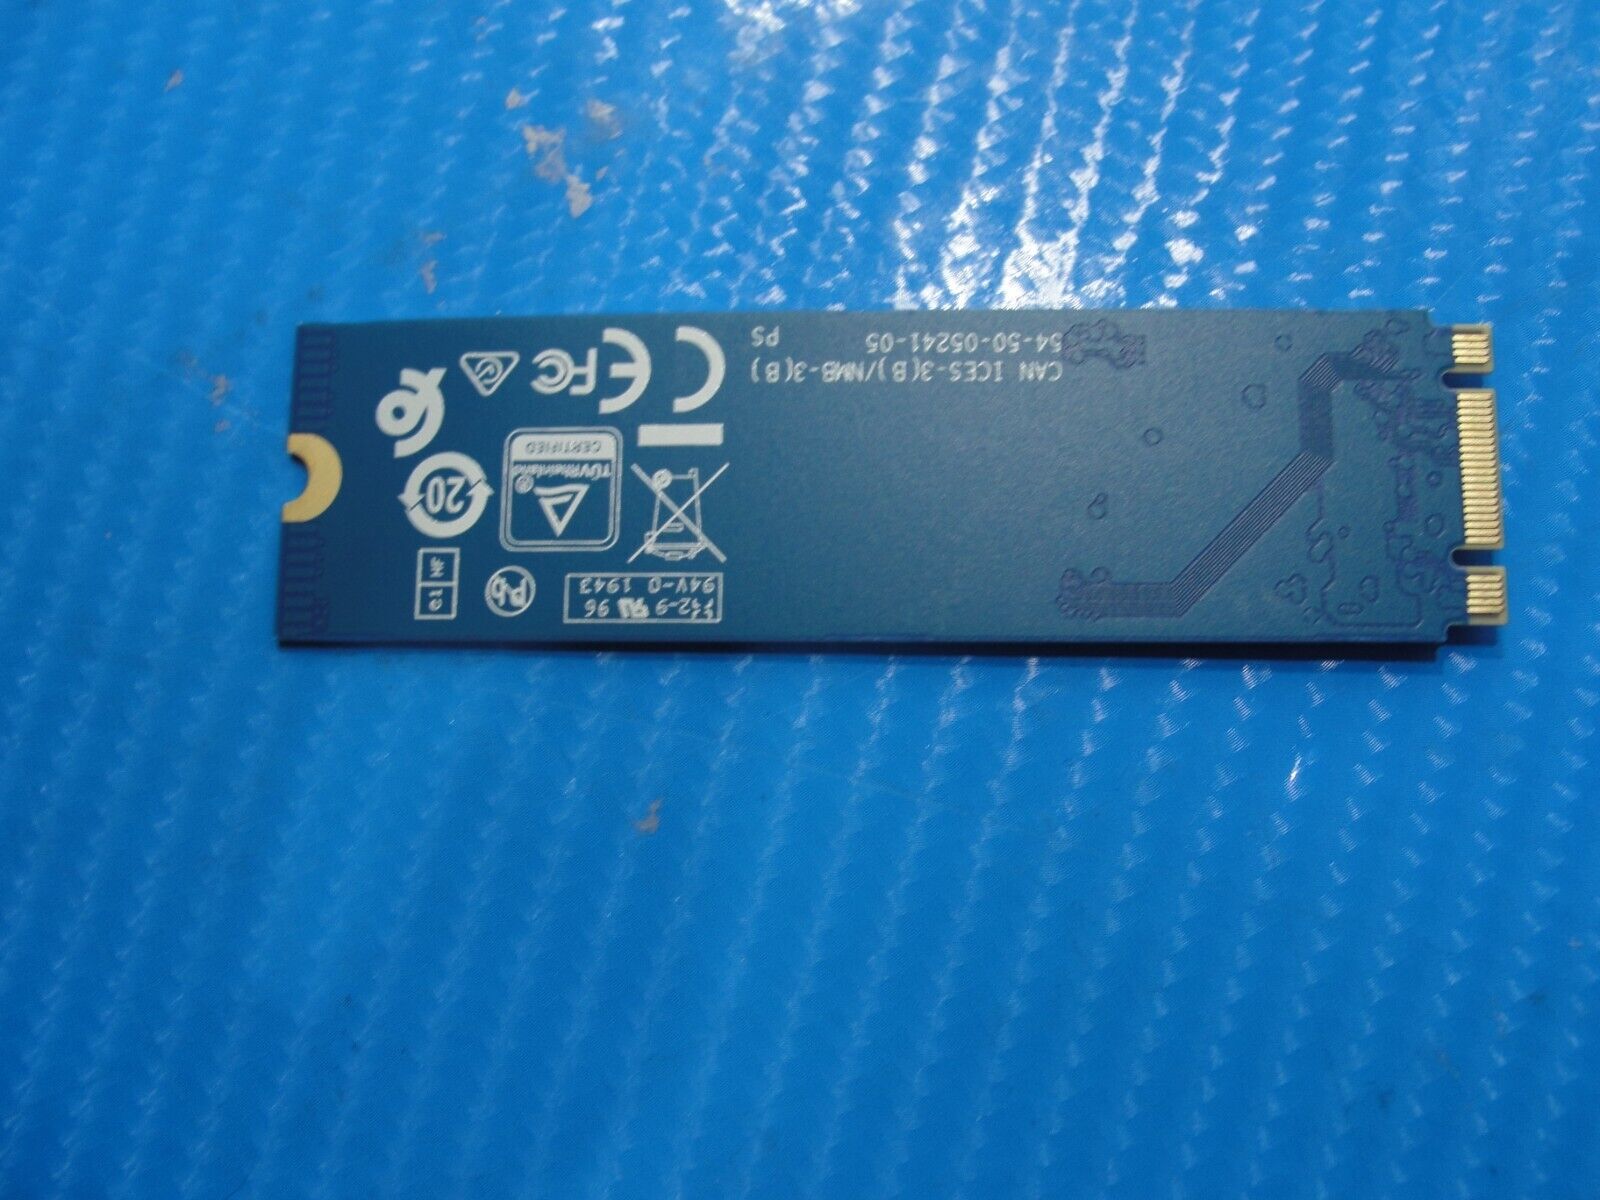 Asus UX325JA WD 256Gb NVMe M.2 SSD Solid State Drive SDAPNUW-256G-1202